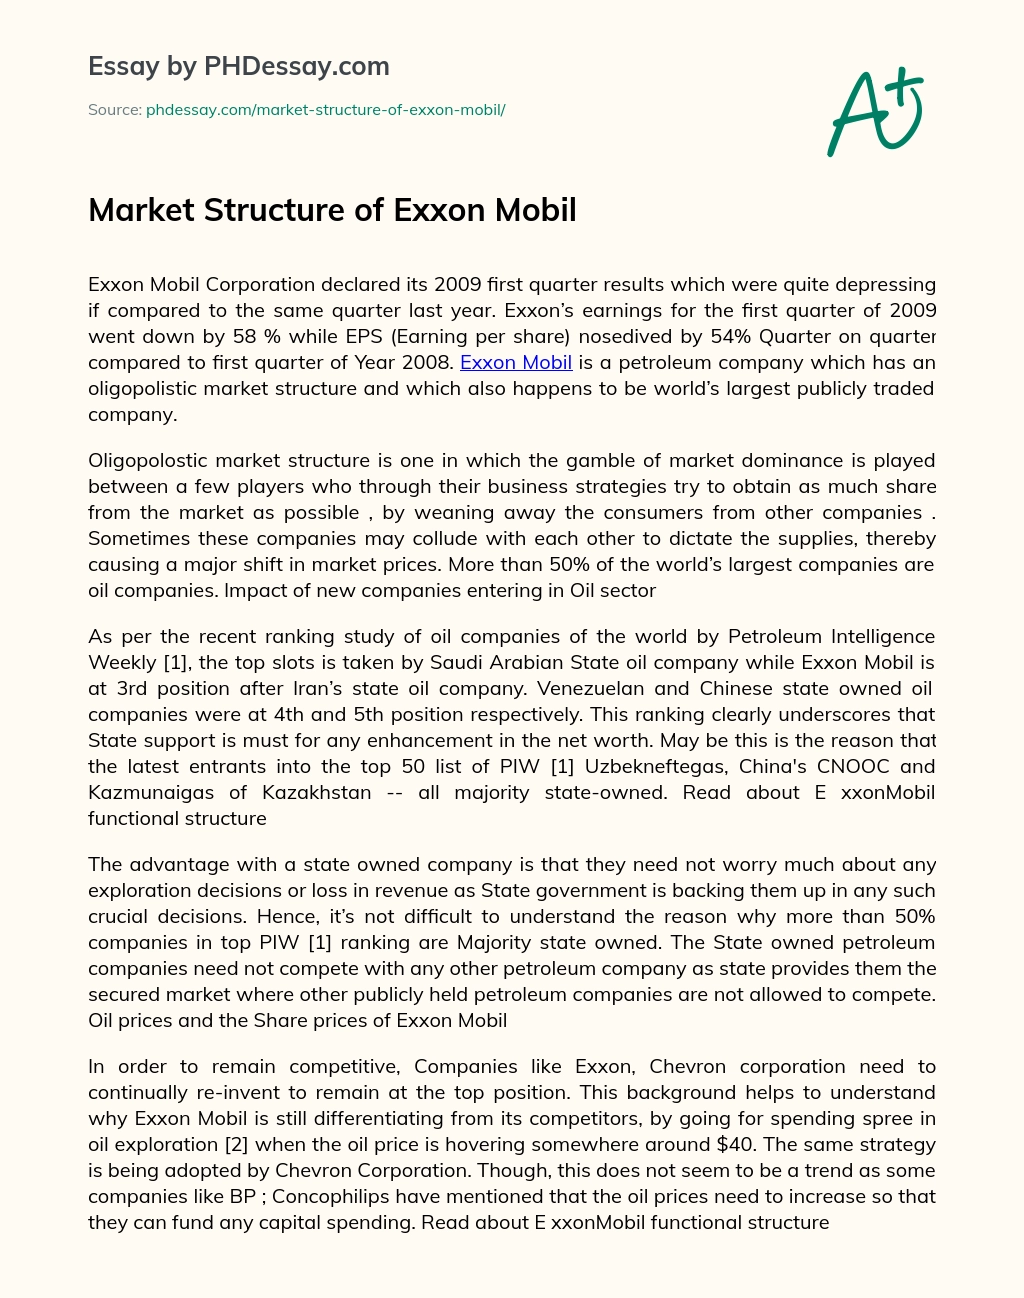 Market Structure of Exxon Mobil essay